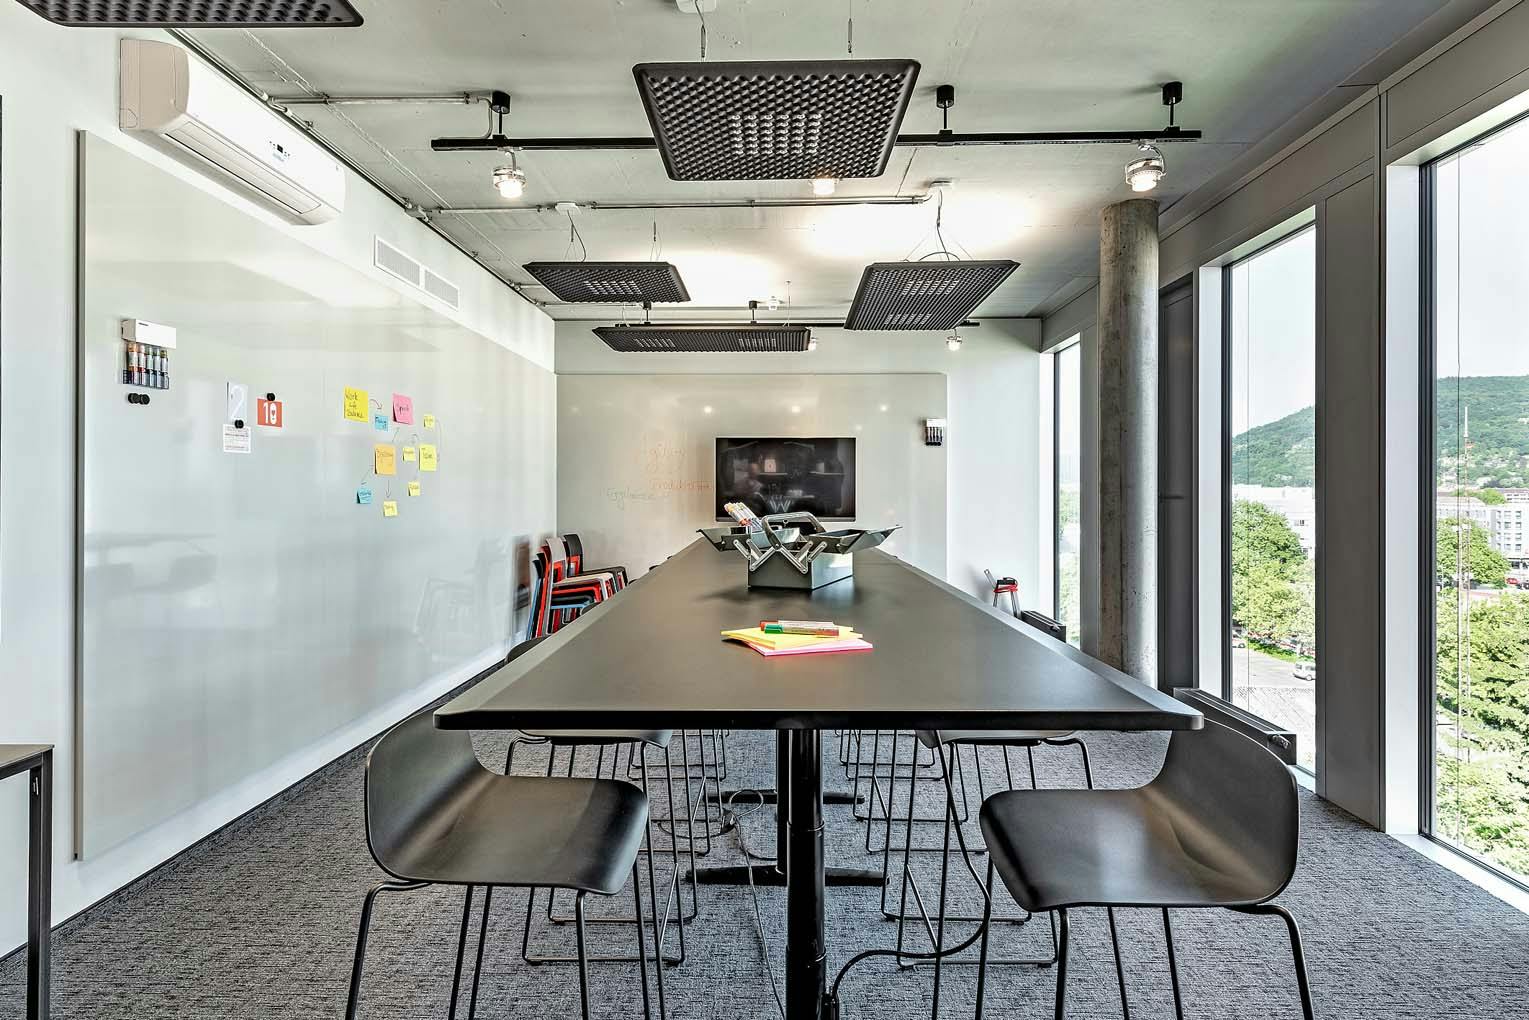 Meet&Move Meetingraum Design Offices